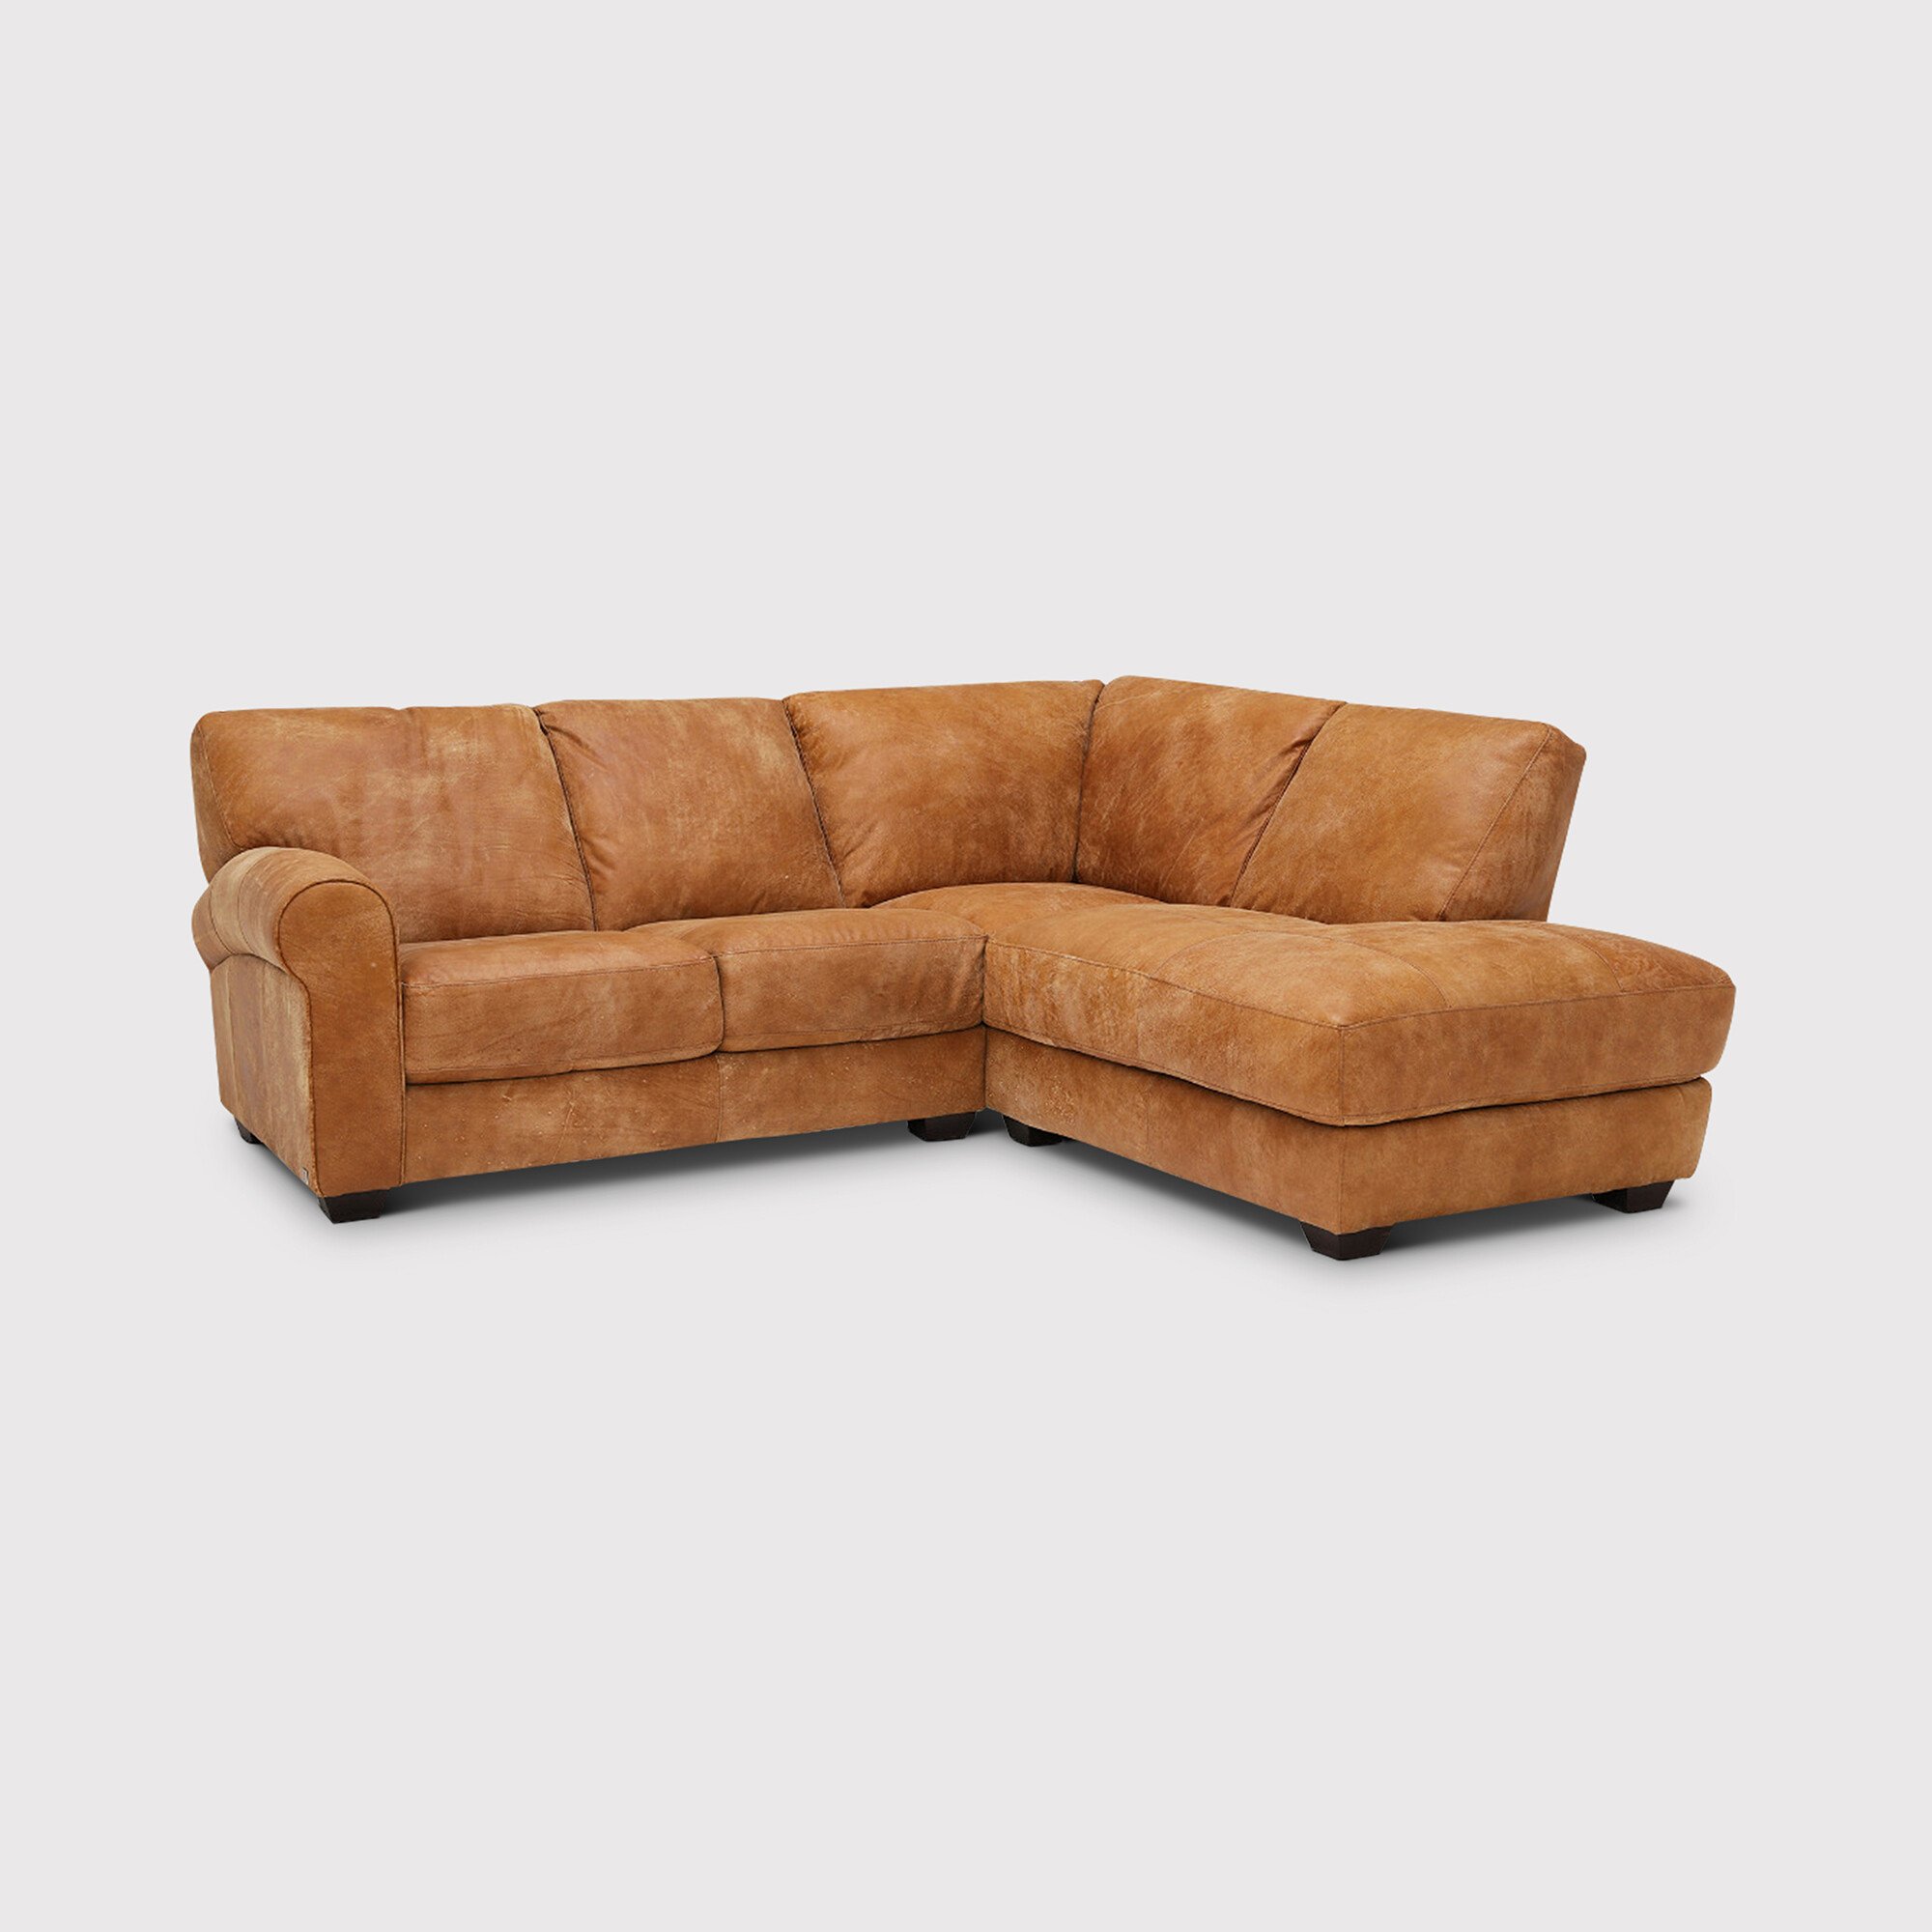 Photo of Houston medium corner rhf chaise corner sofa in brown leather